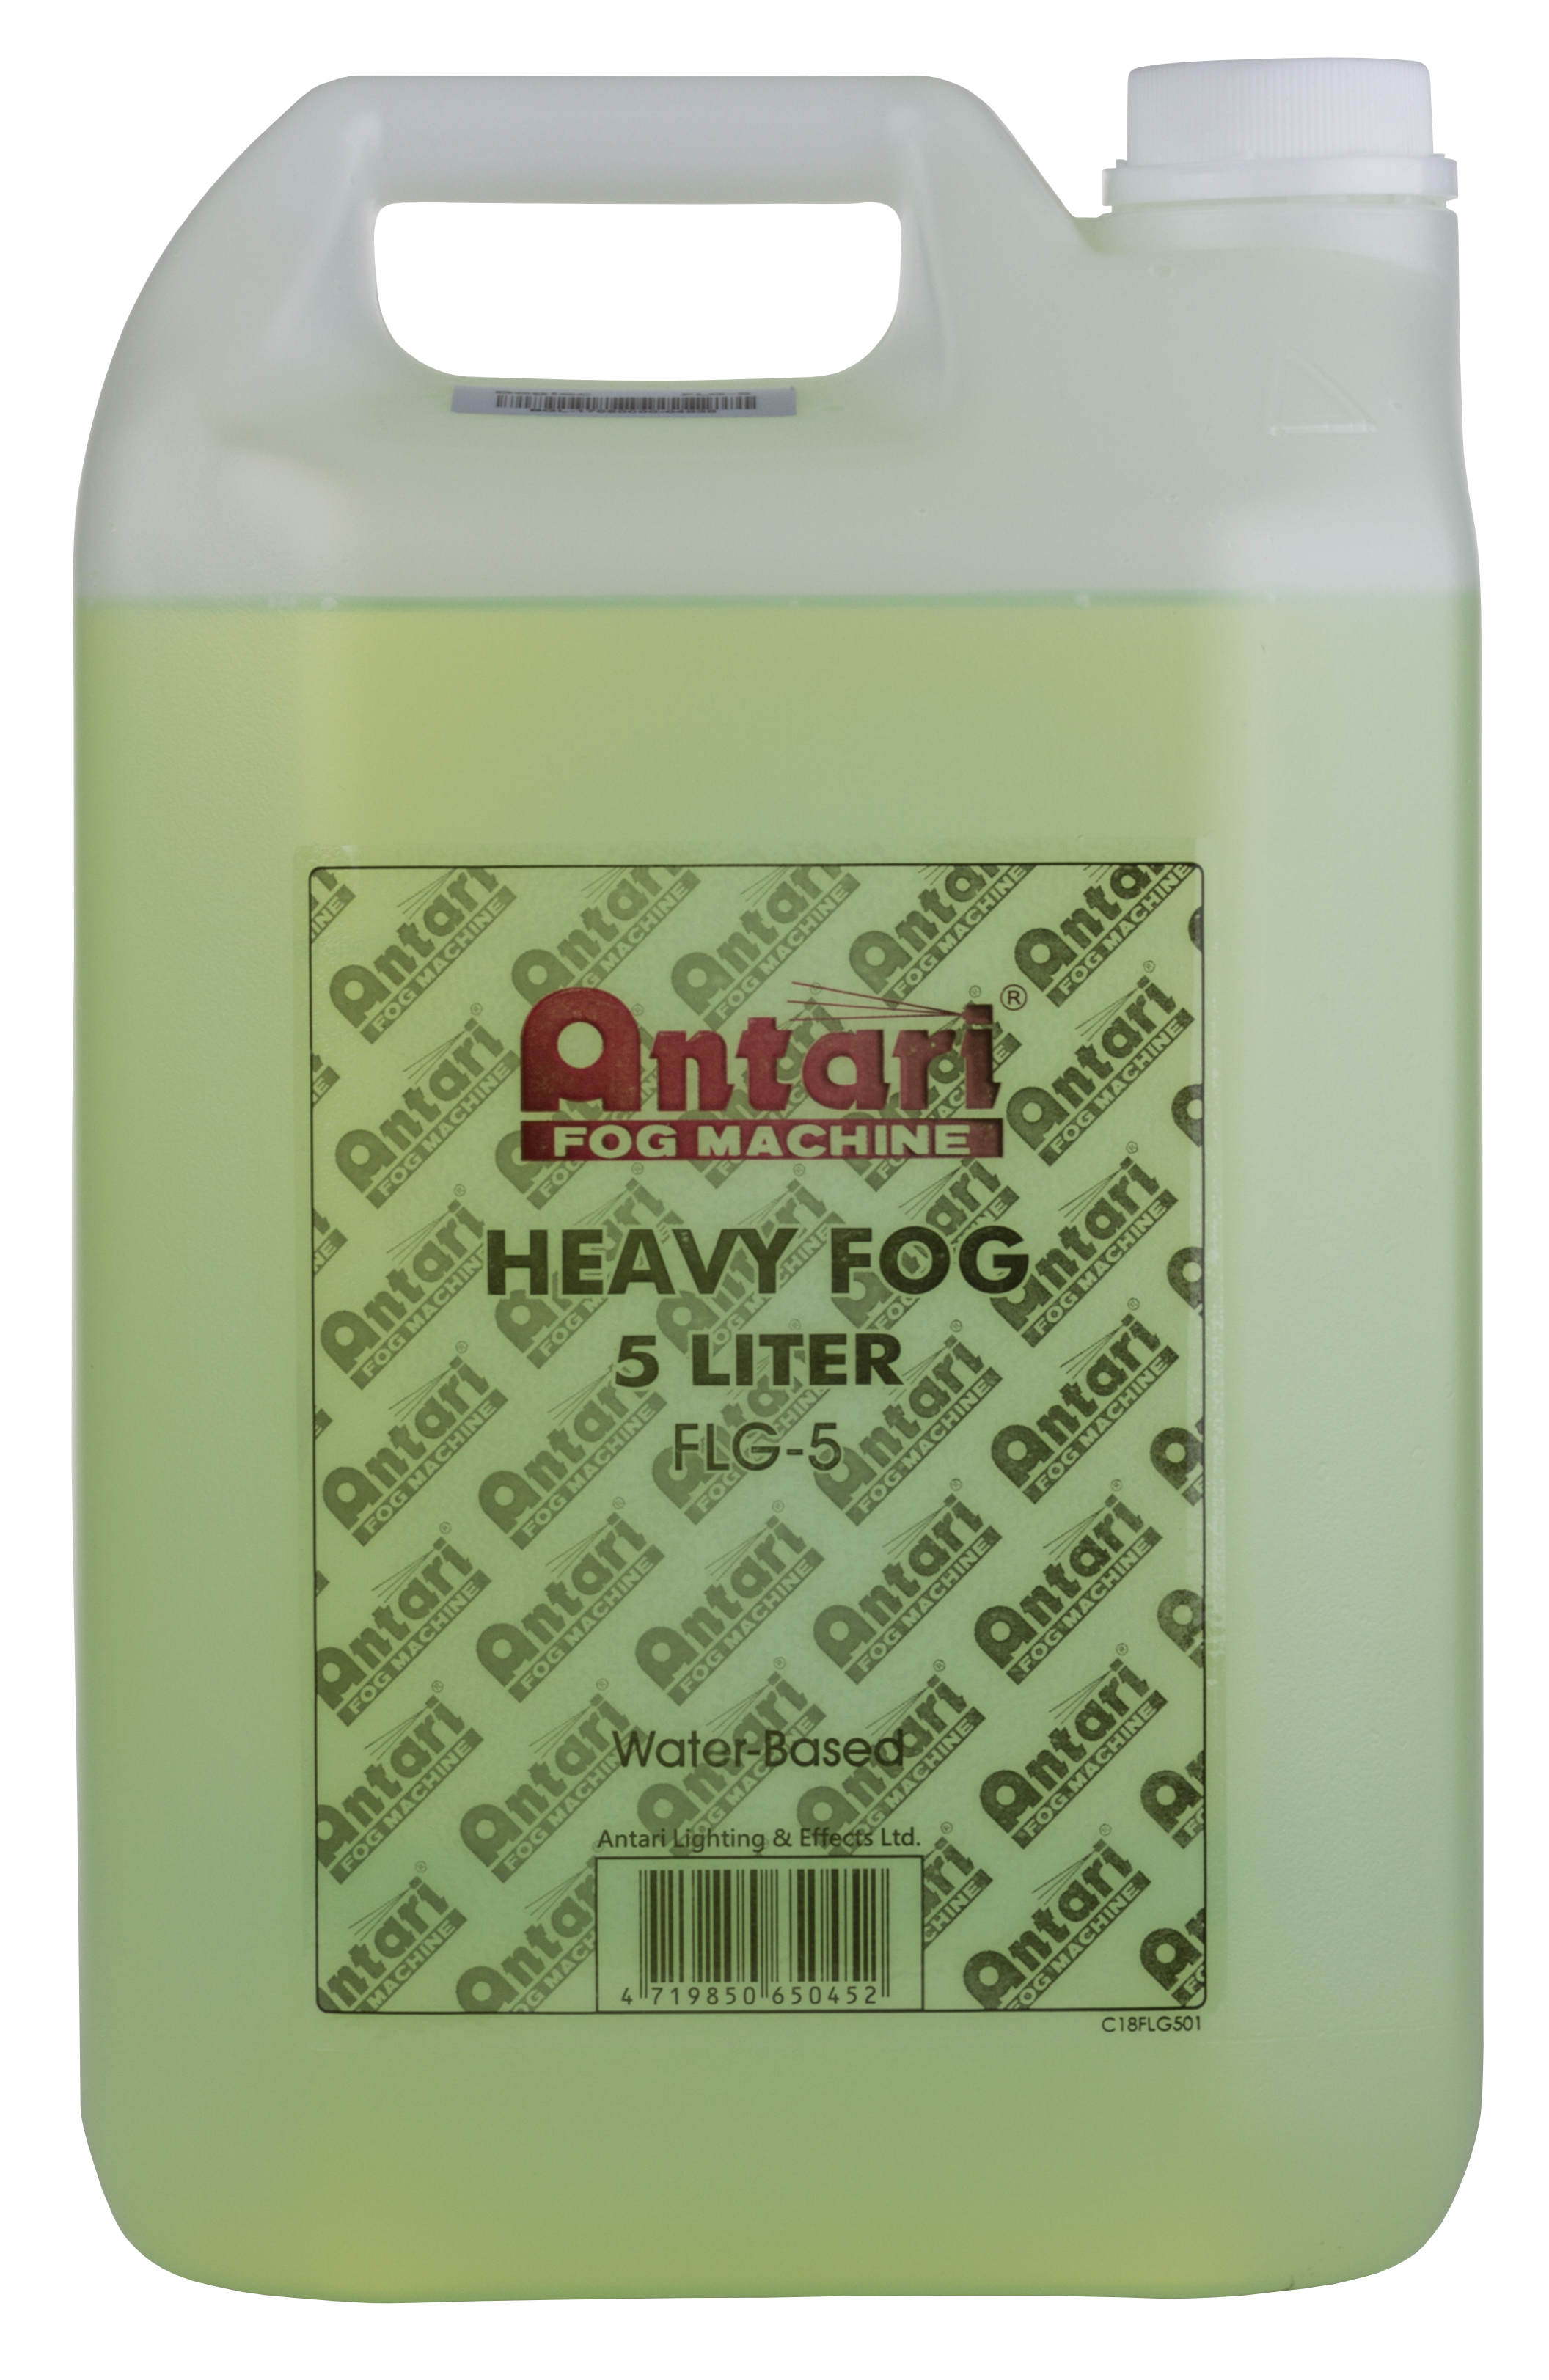 ANTARI FLG Heavy Fog Liquid produces fog which has a longer lasting time.